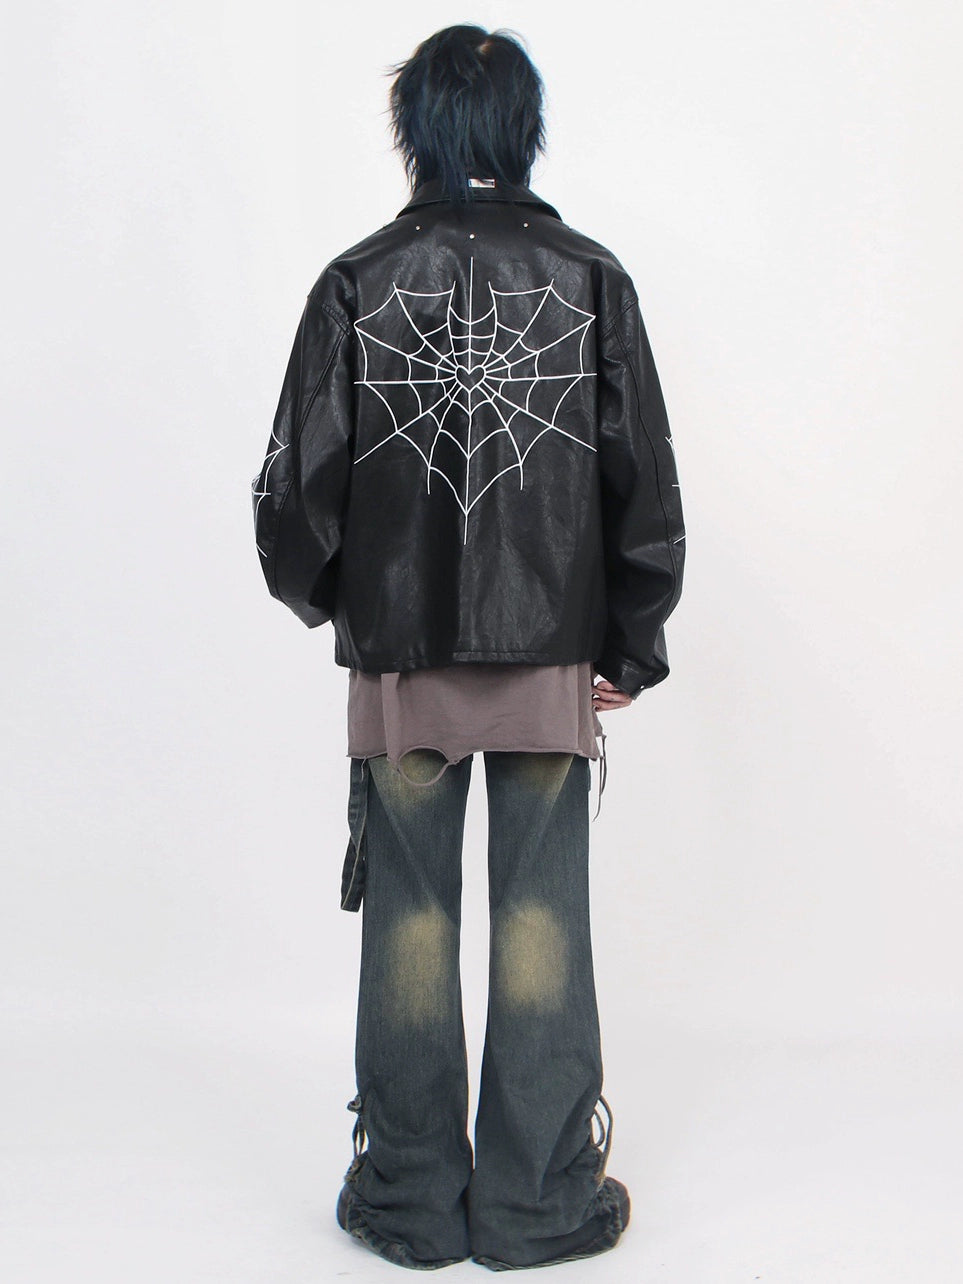 Spider Leather Jacket